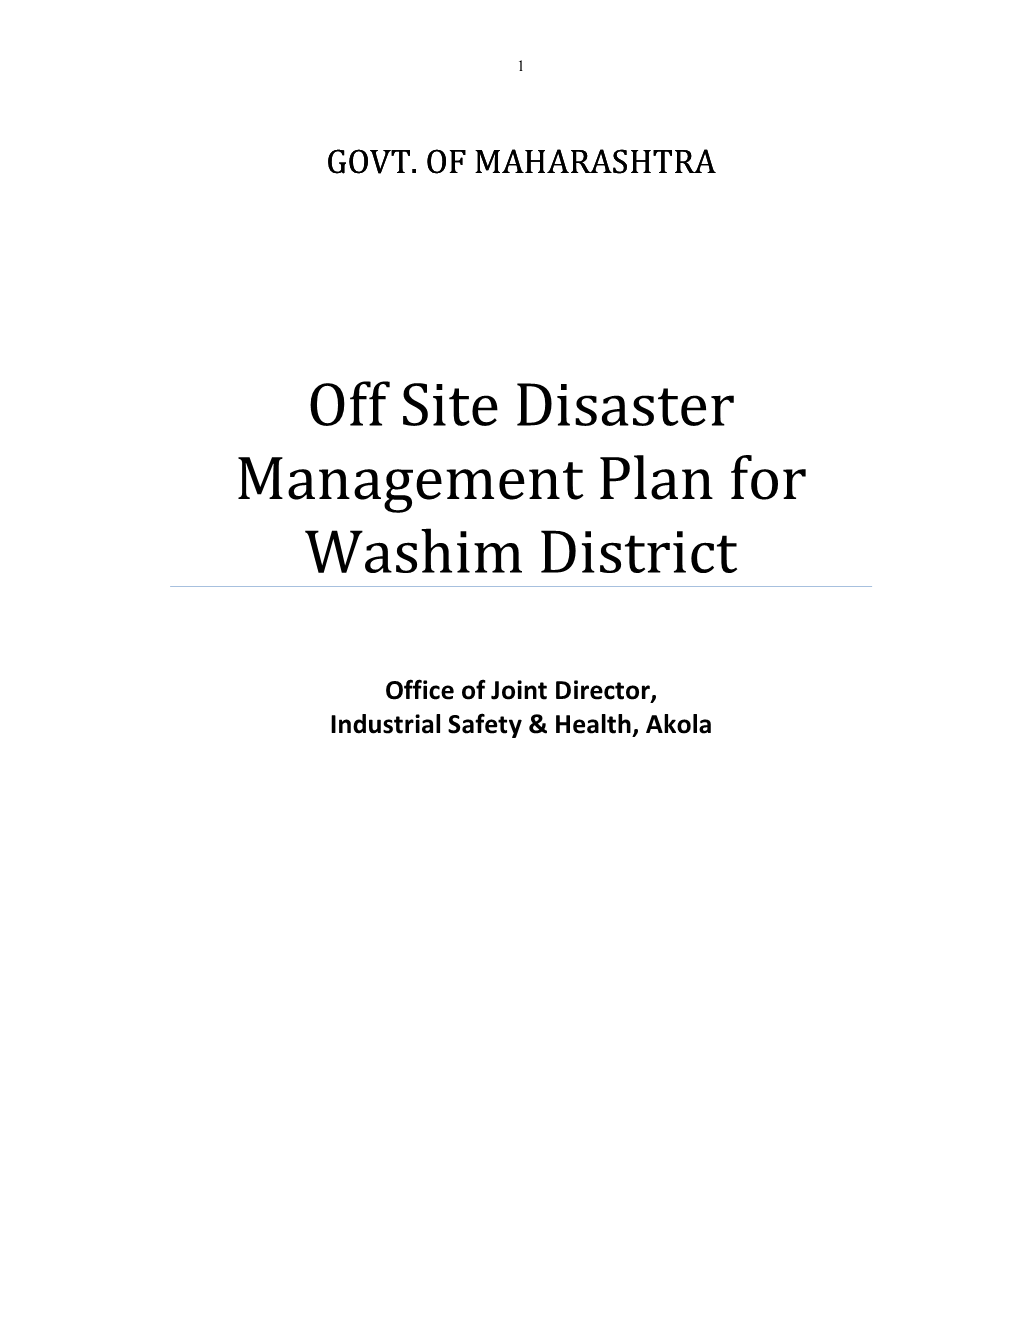 Off Site Disaster Management Plan for Washim District